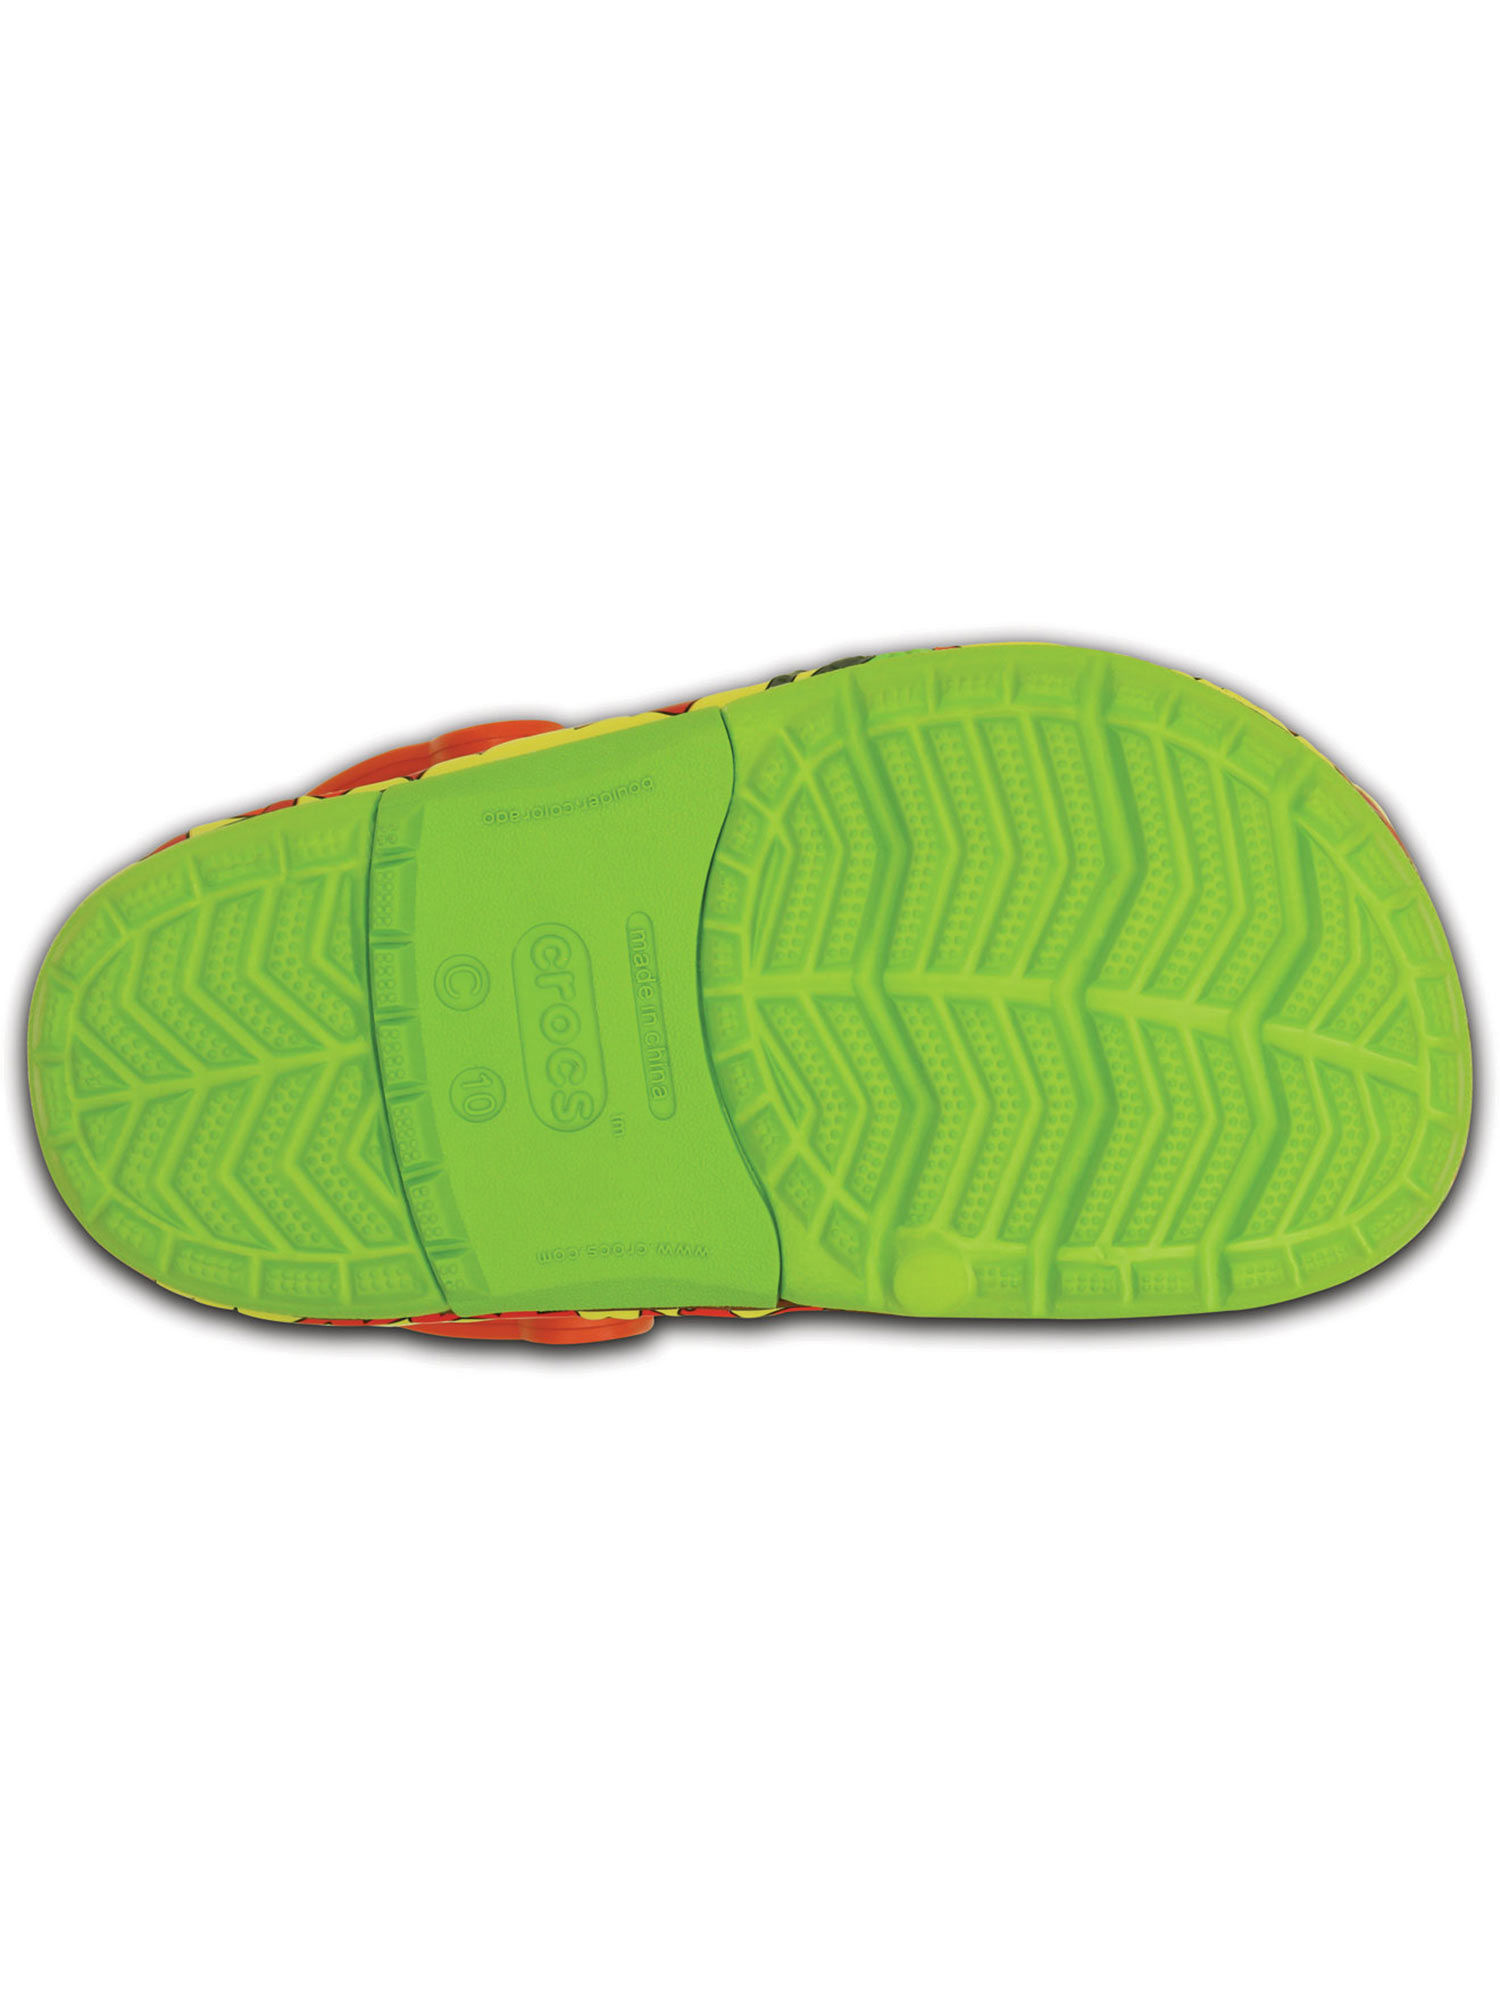 Crocs Green Lights Clogs: Buy Crocs Green Lights Clogs Online at Best ...